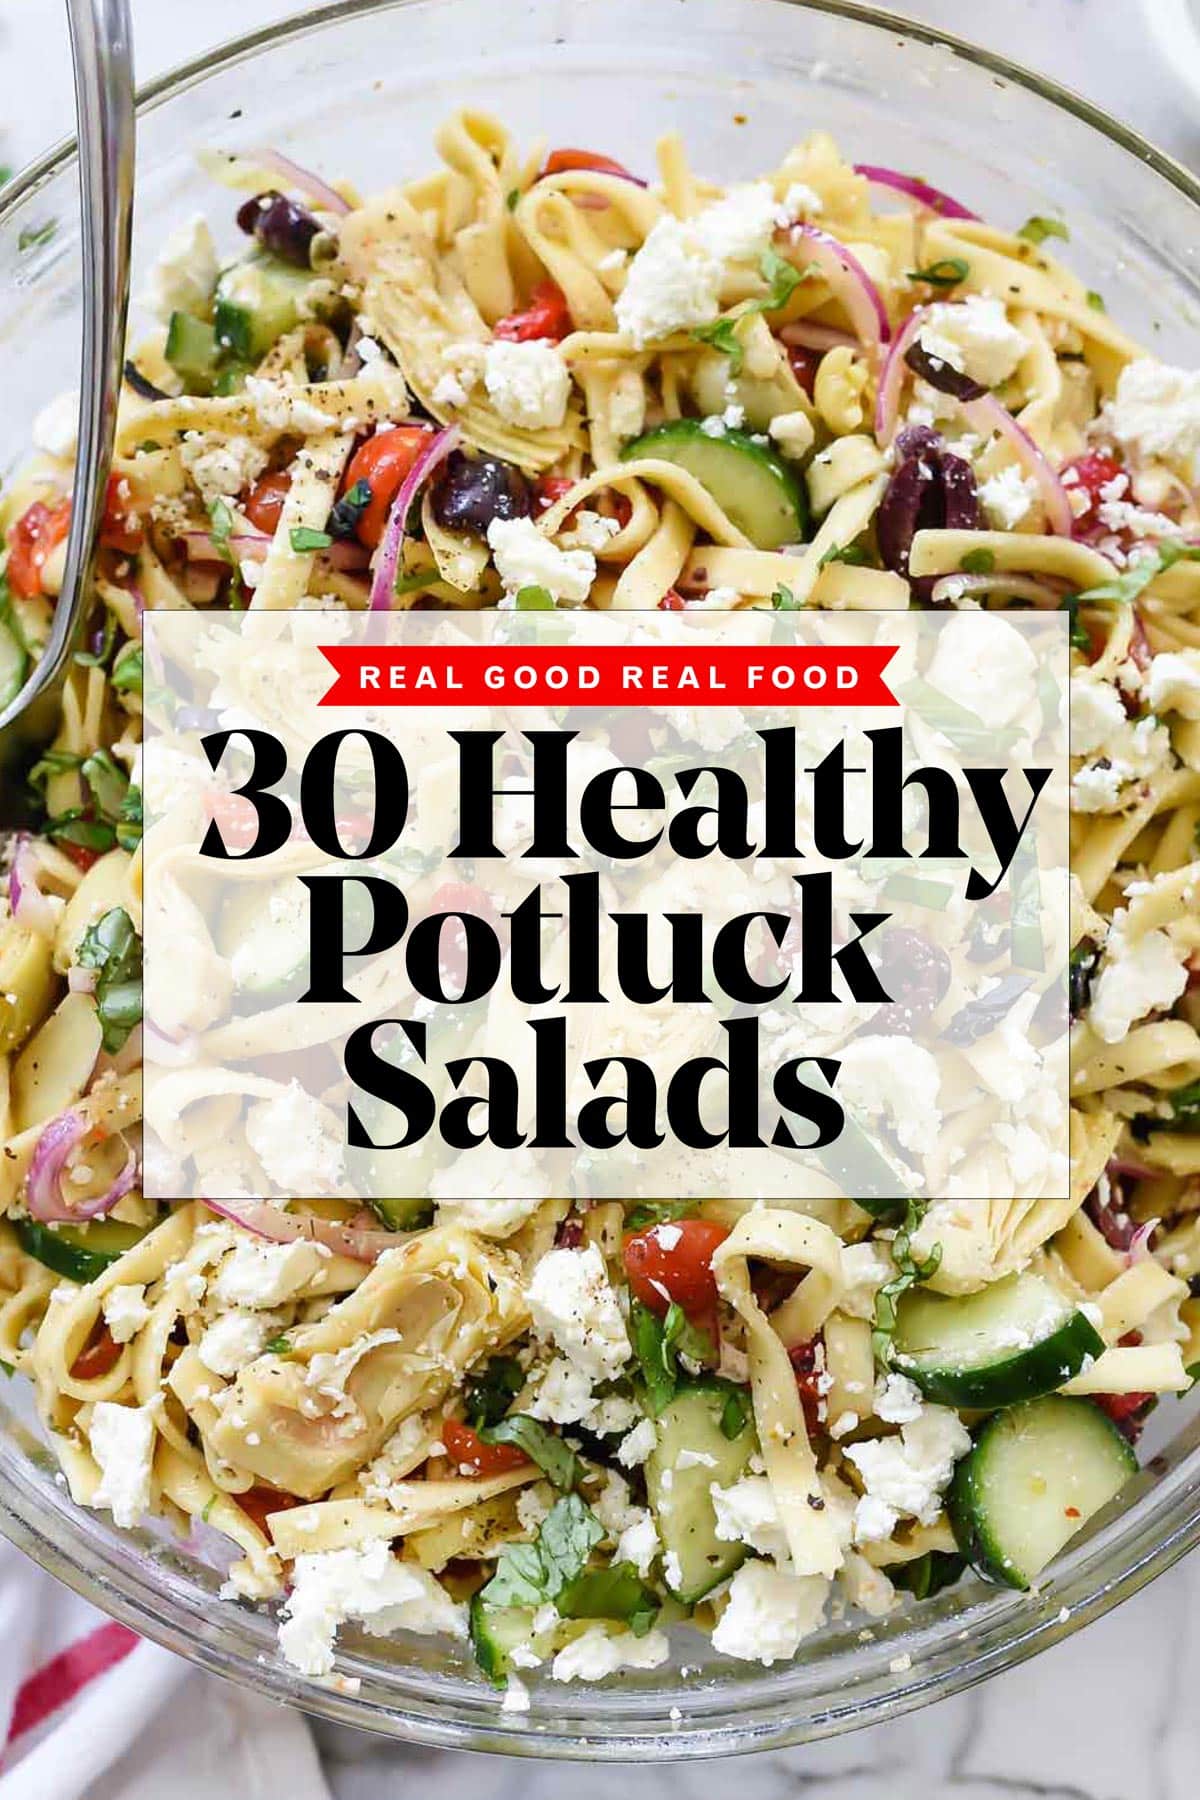 https://www.foodiecrush.com/wp-content/uploads/2018/05/Healthy-Potluck-Salad-foodiecrush.com_.jpg